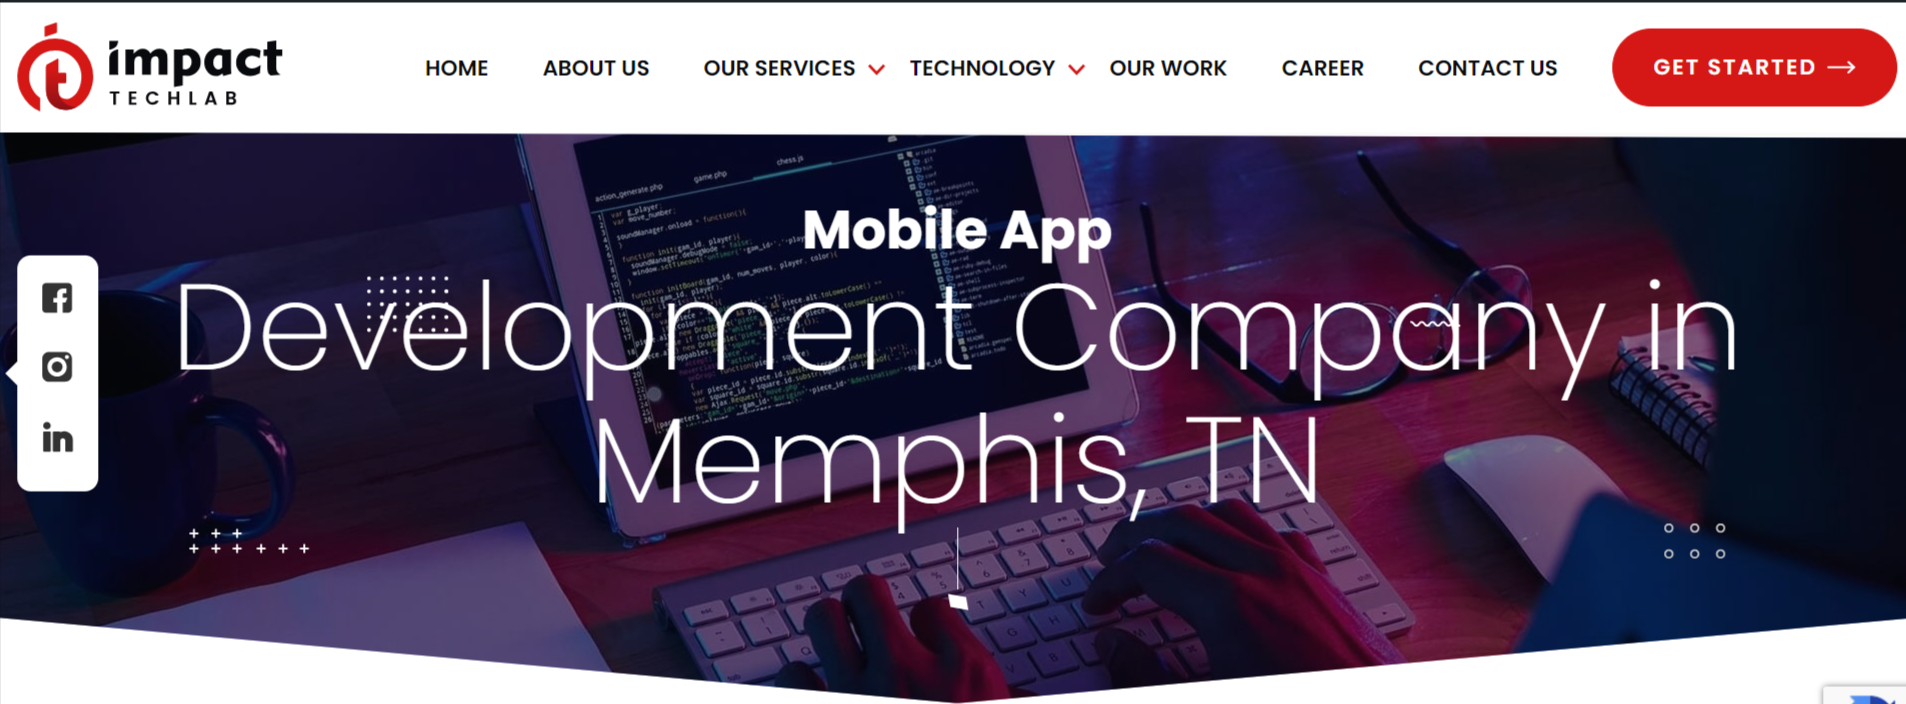 Leading Mobile App Development Agency Hire Mobile App Develpers Impact Techlab